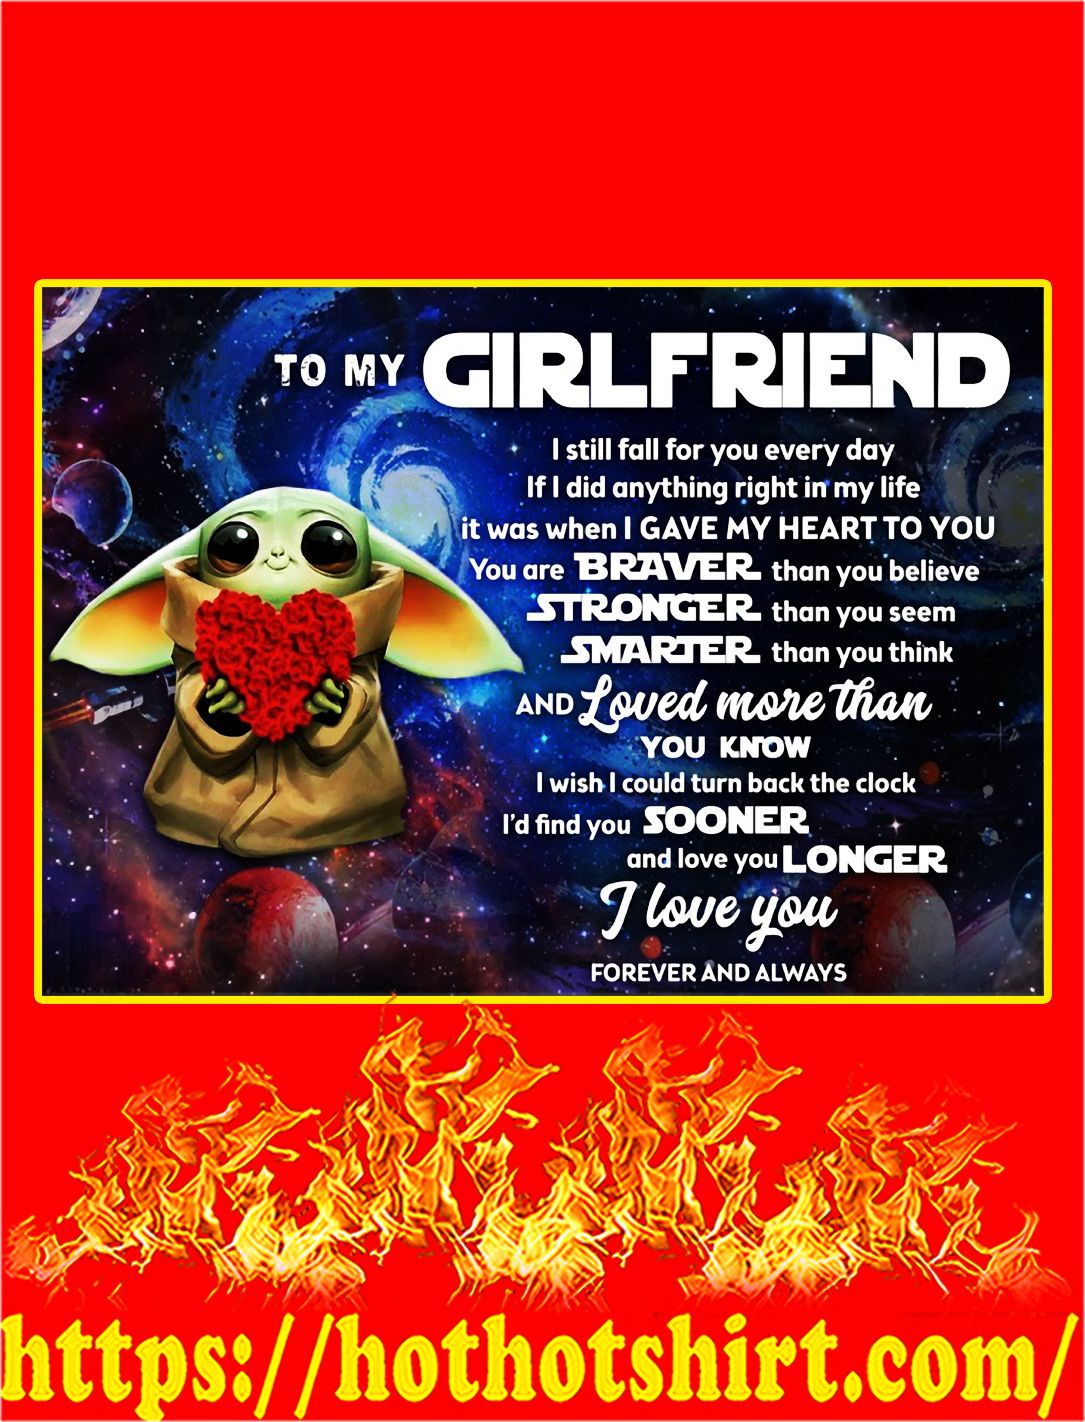 Baby yoda to my girlfriend poster